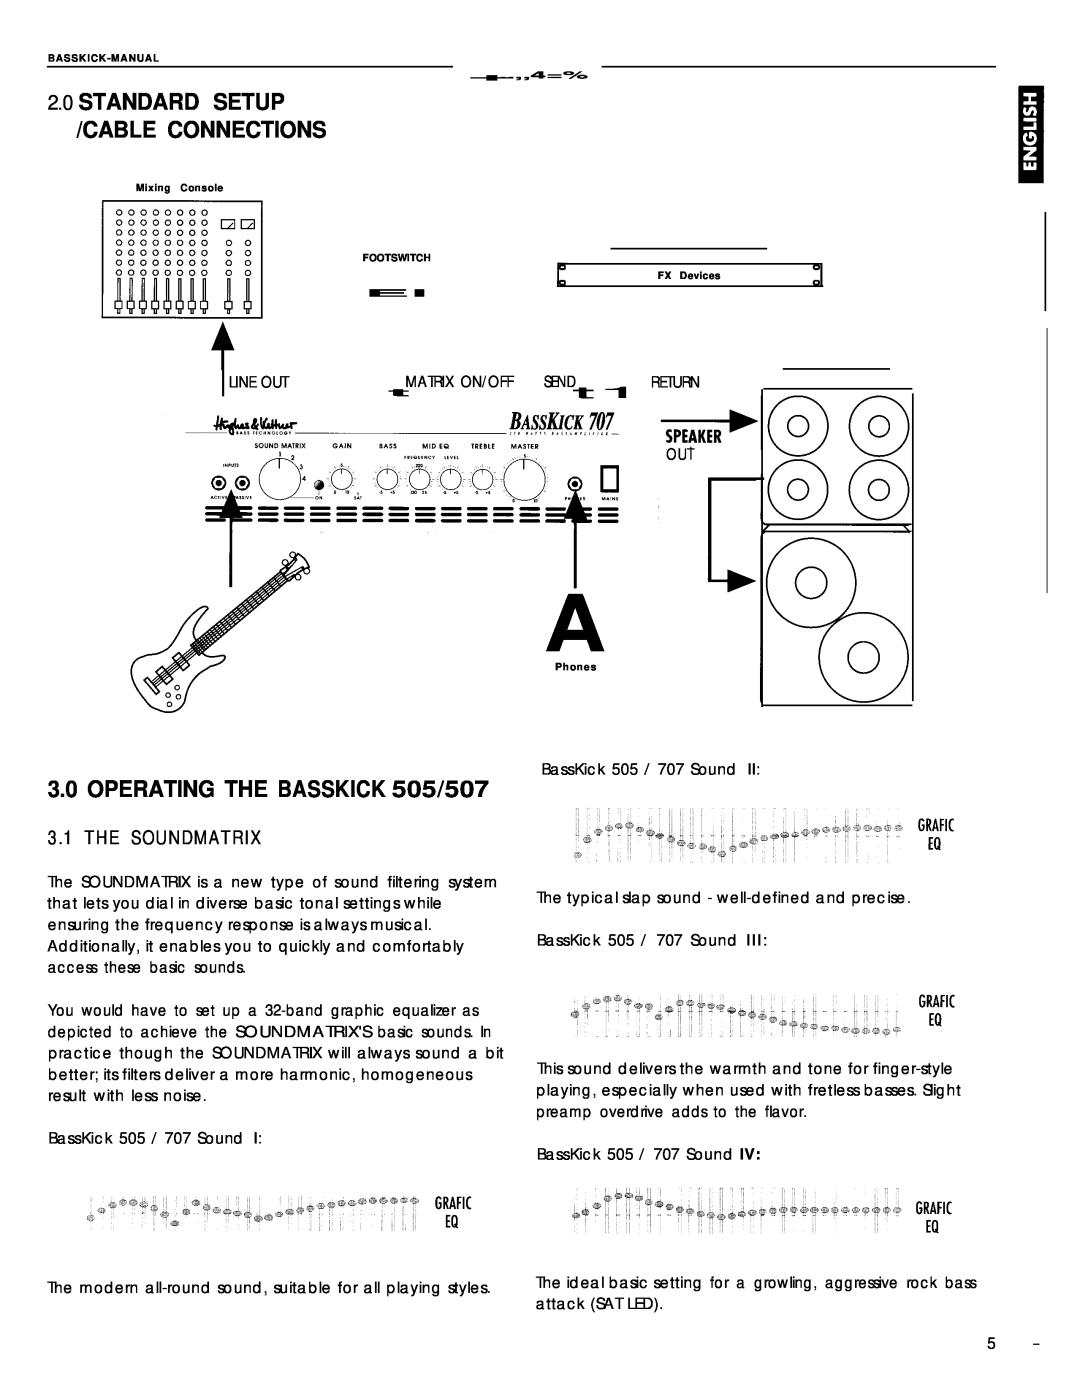 Hughes & Kettner Bass Kick 515 Standard Setup /Cable Connections, The Soundmatrix, OPERATING THE BASSKICK 505/507, Send 